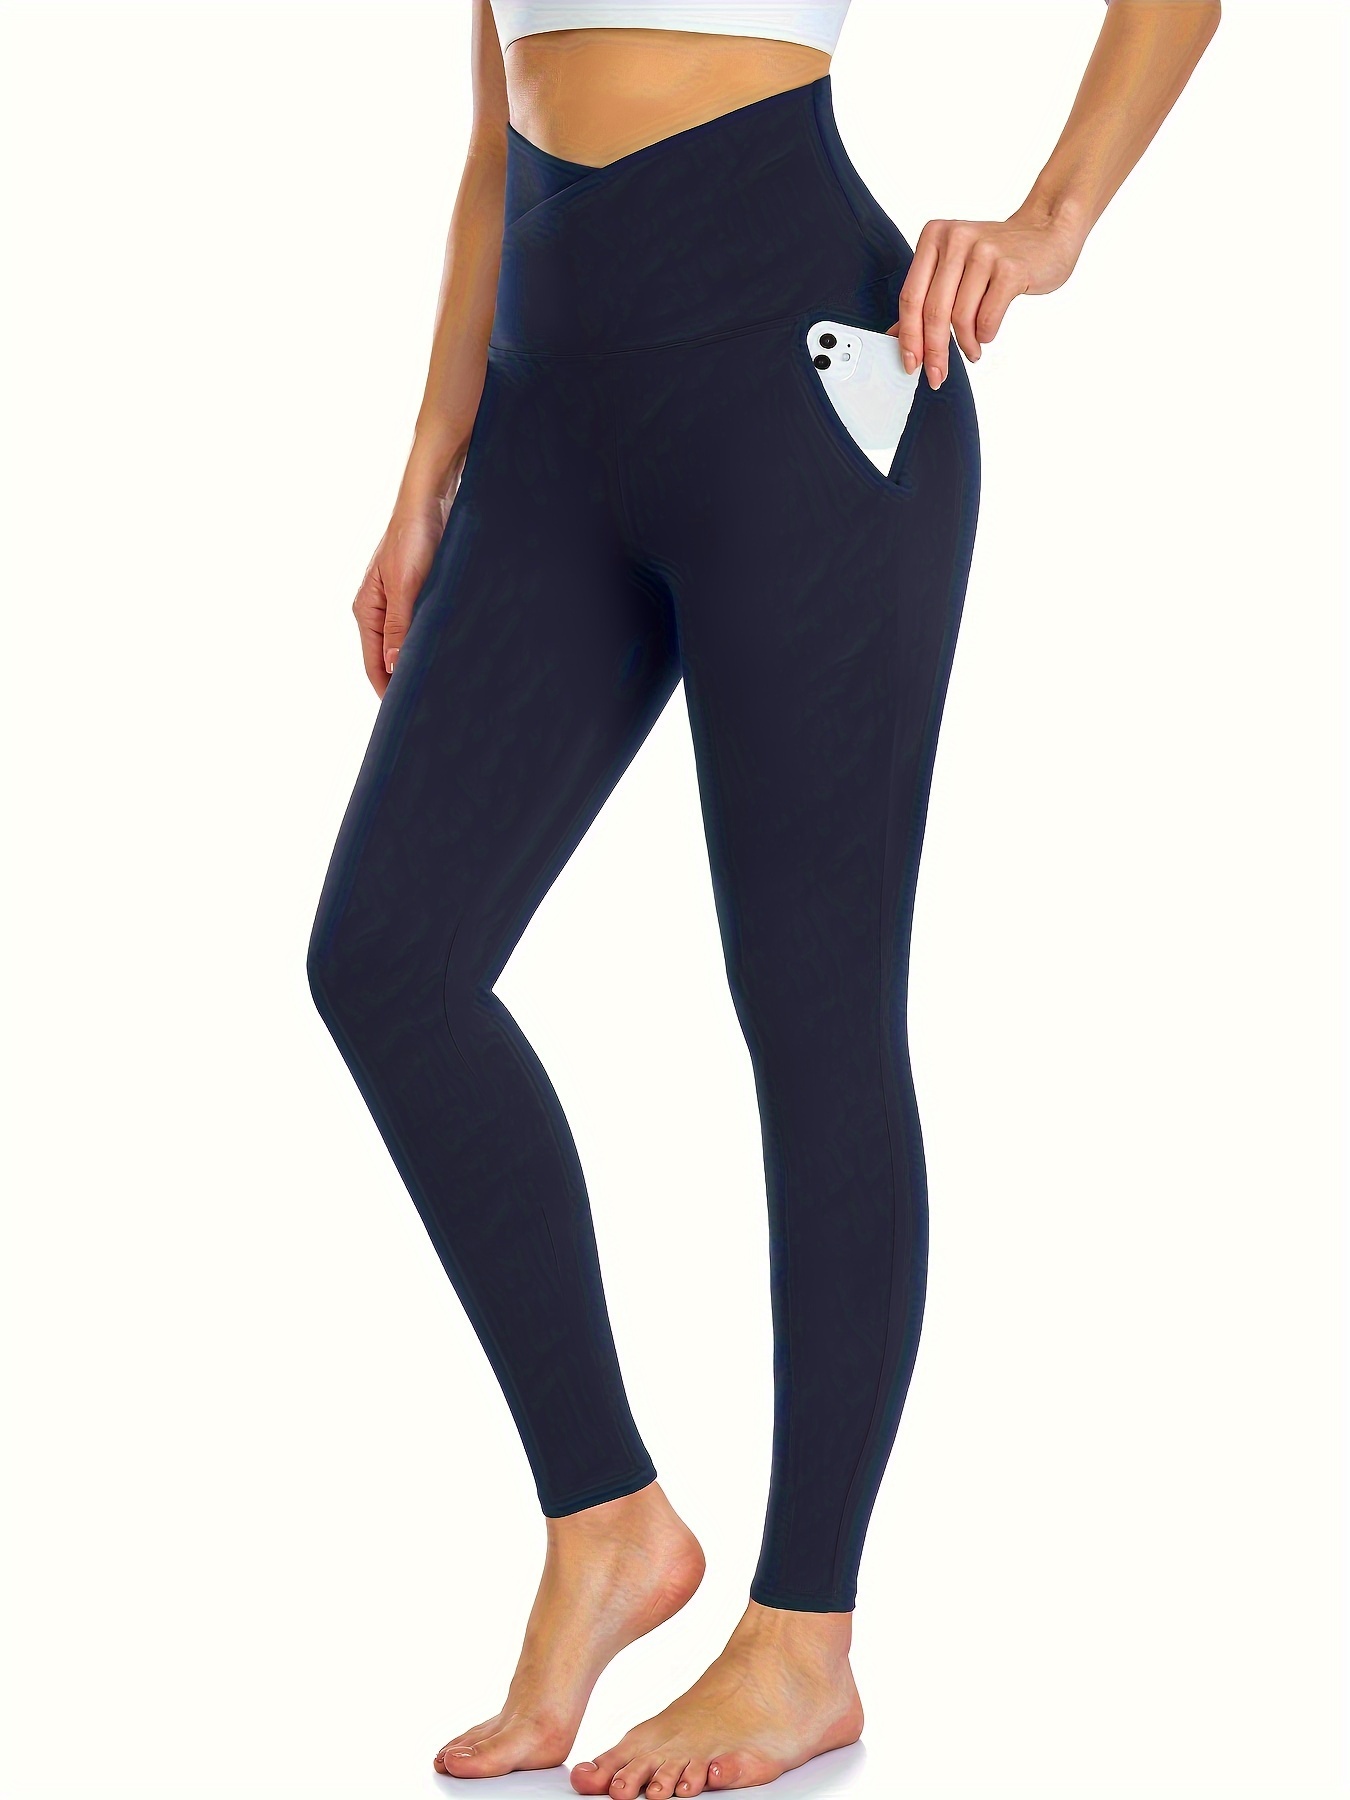 Hfyihgf V Cross Waist Leggings for Women Tummy Control Soft Workout Running  High Waisted Non See-Through Yoga Pants(Blue,S)